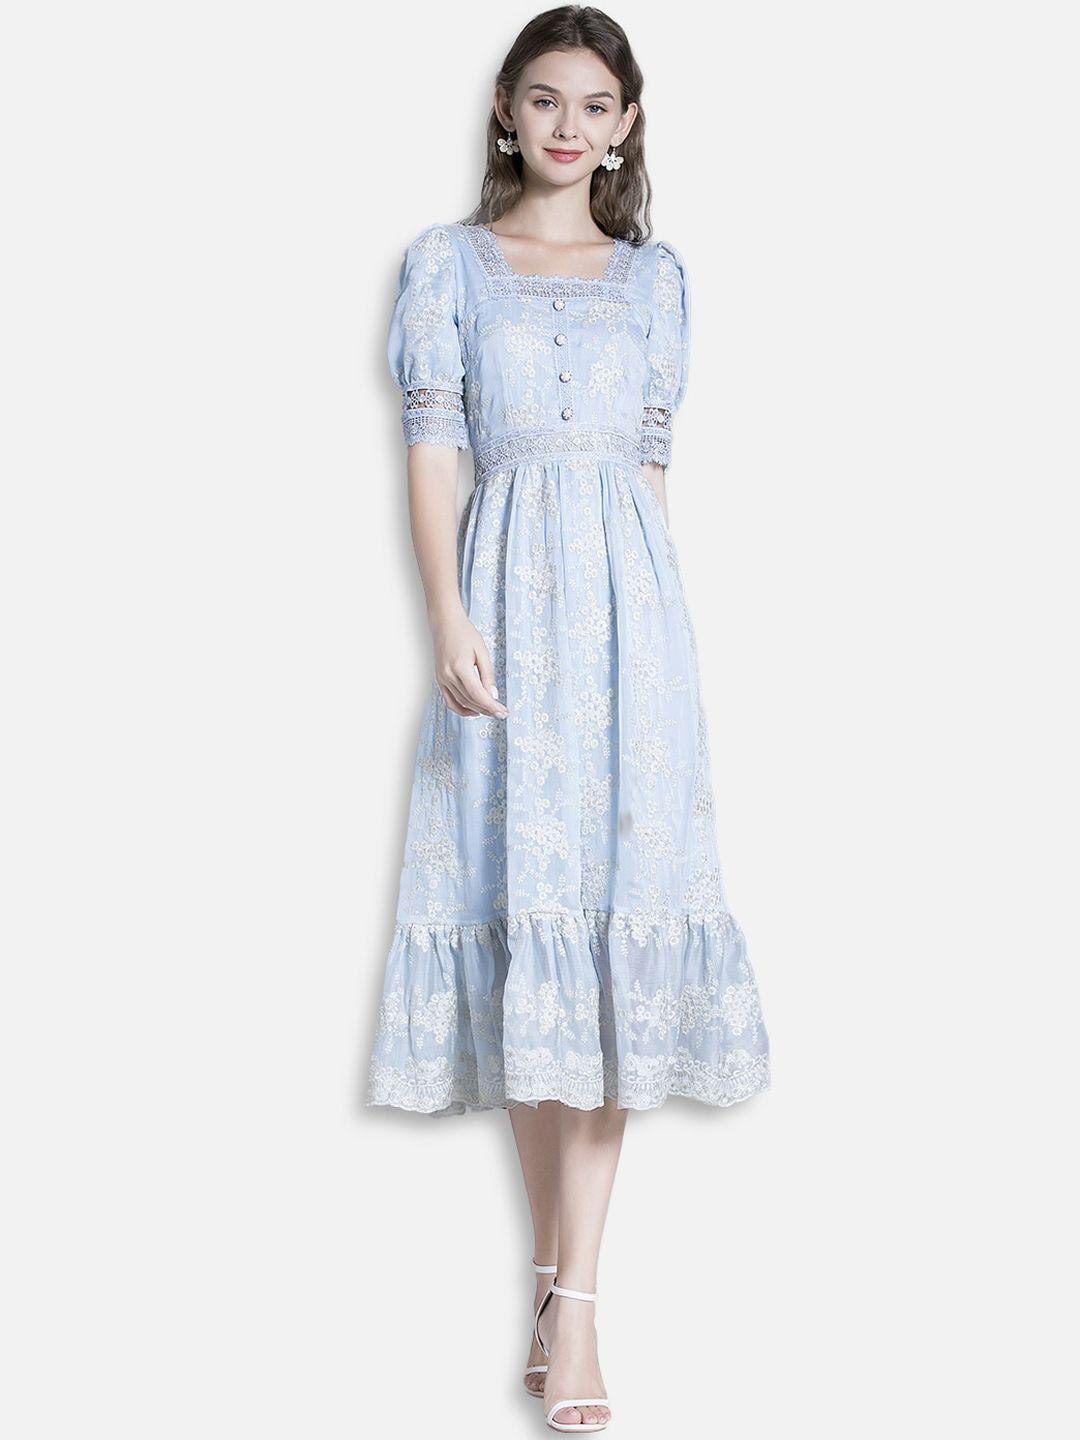 jc collection blue & white floral midi dress